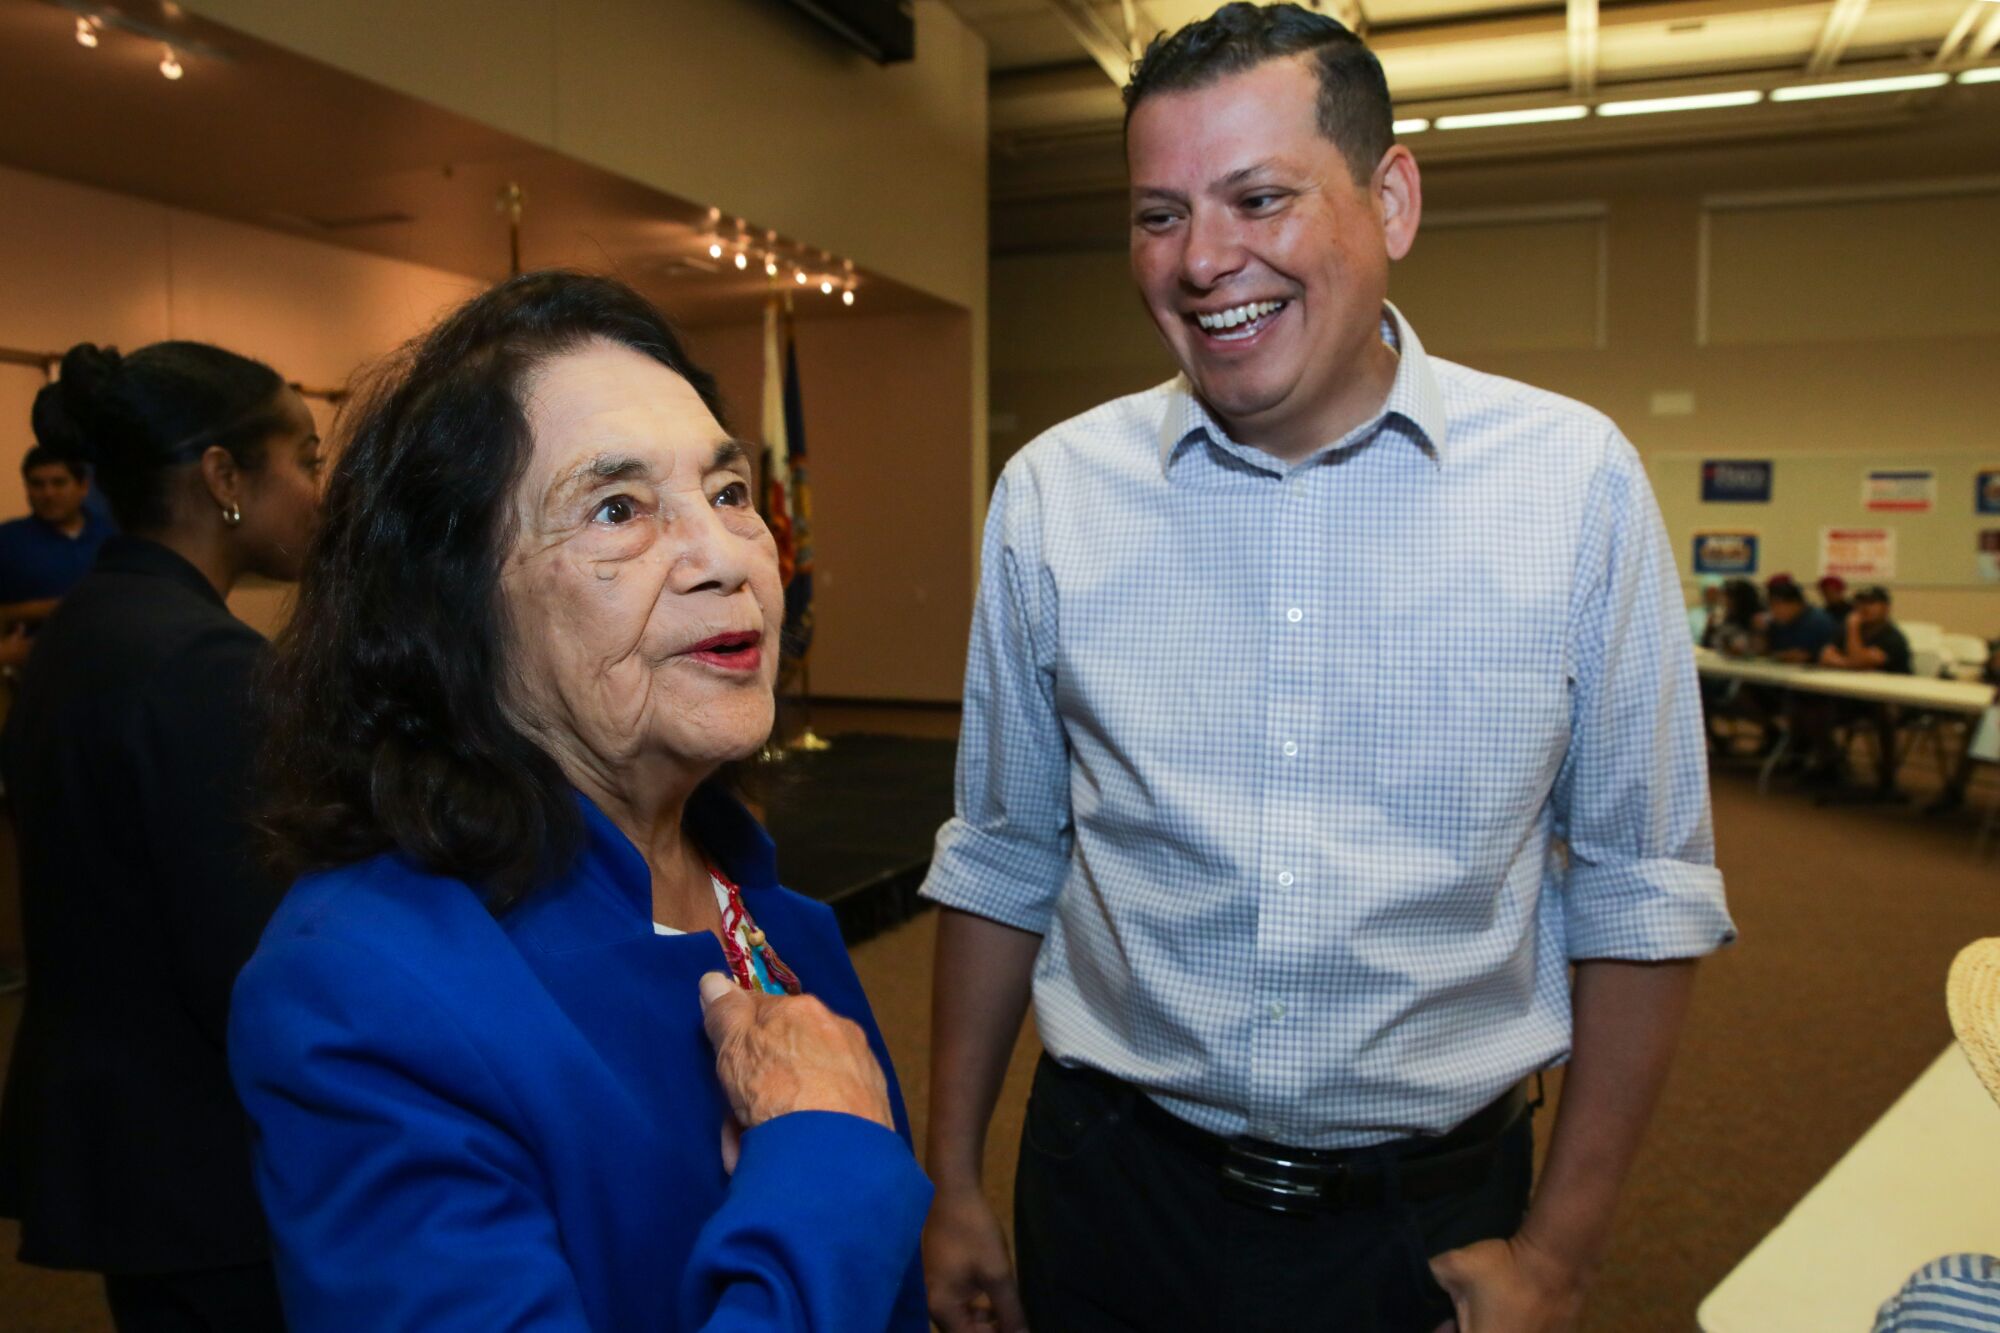 Dolores Huerta talks to Rudy Salas at a campaign event.